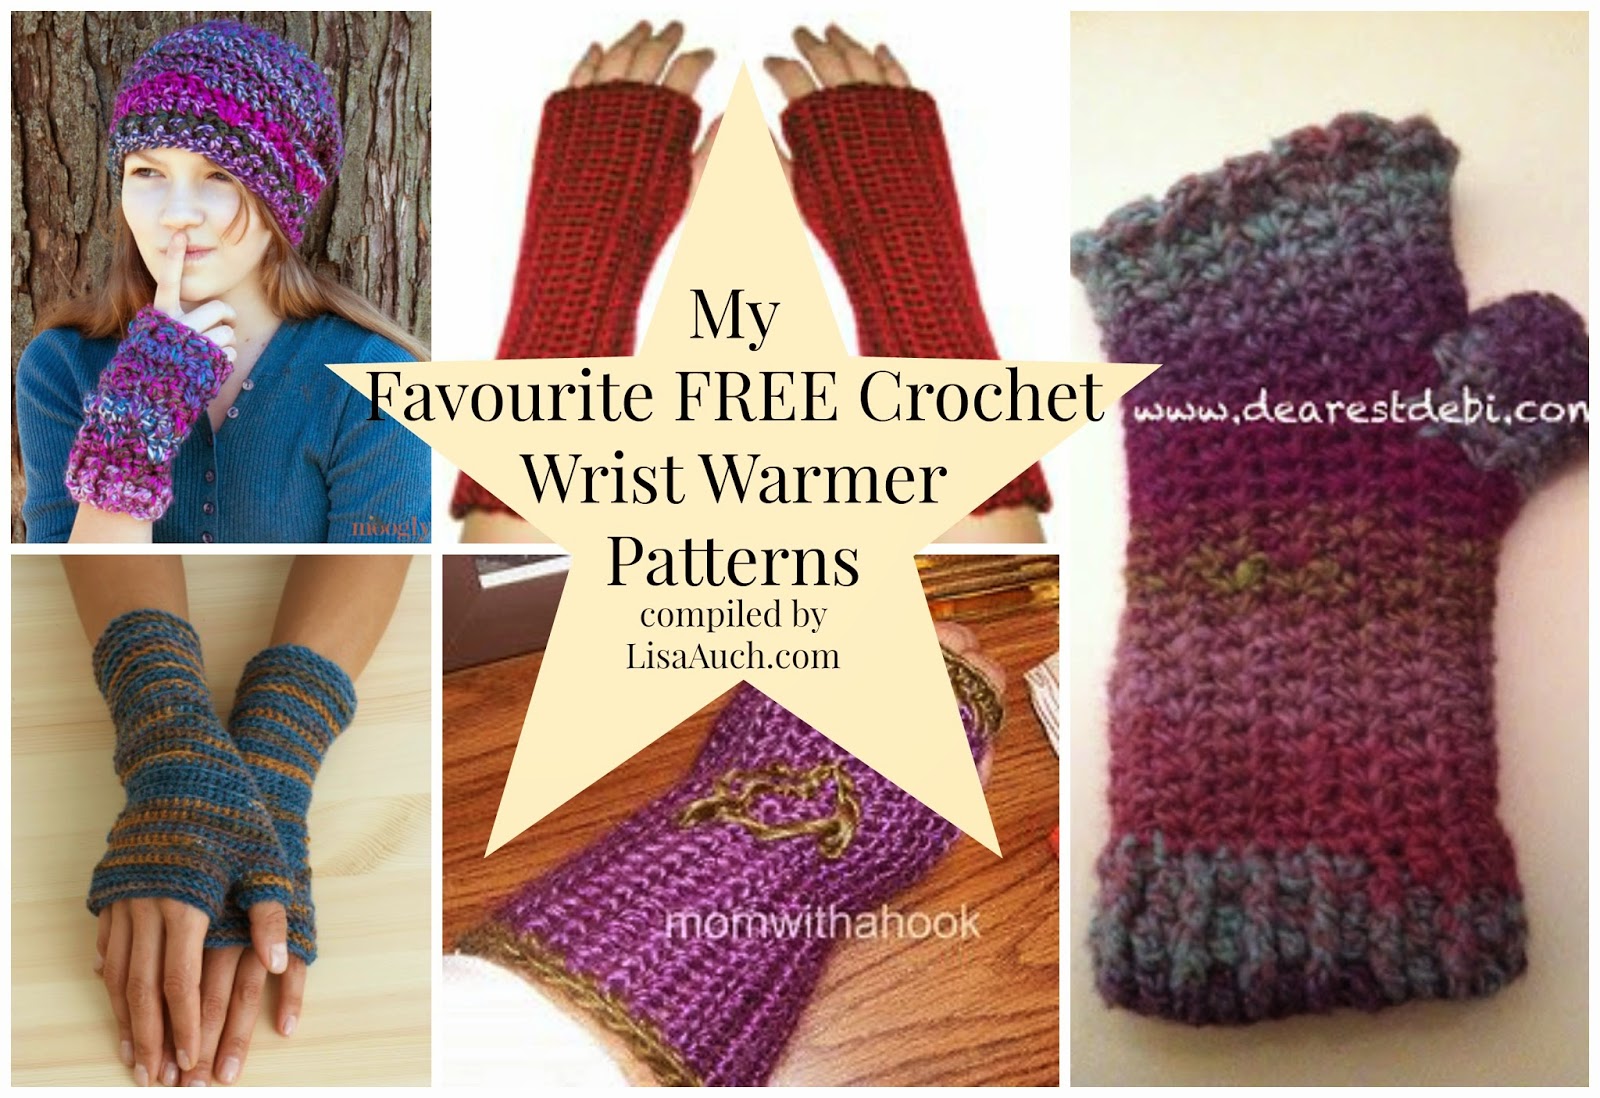 Free Crochet Patterns for Wrist Warmers & Fingerless Gloves | FREE